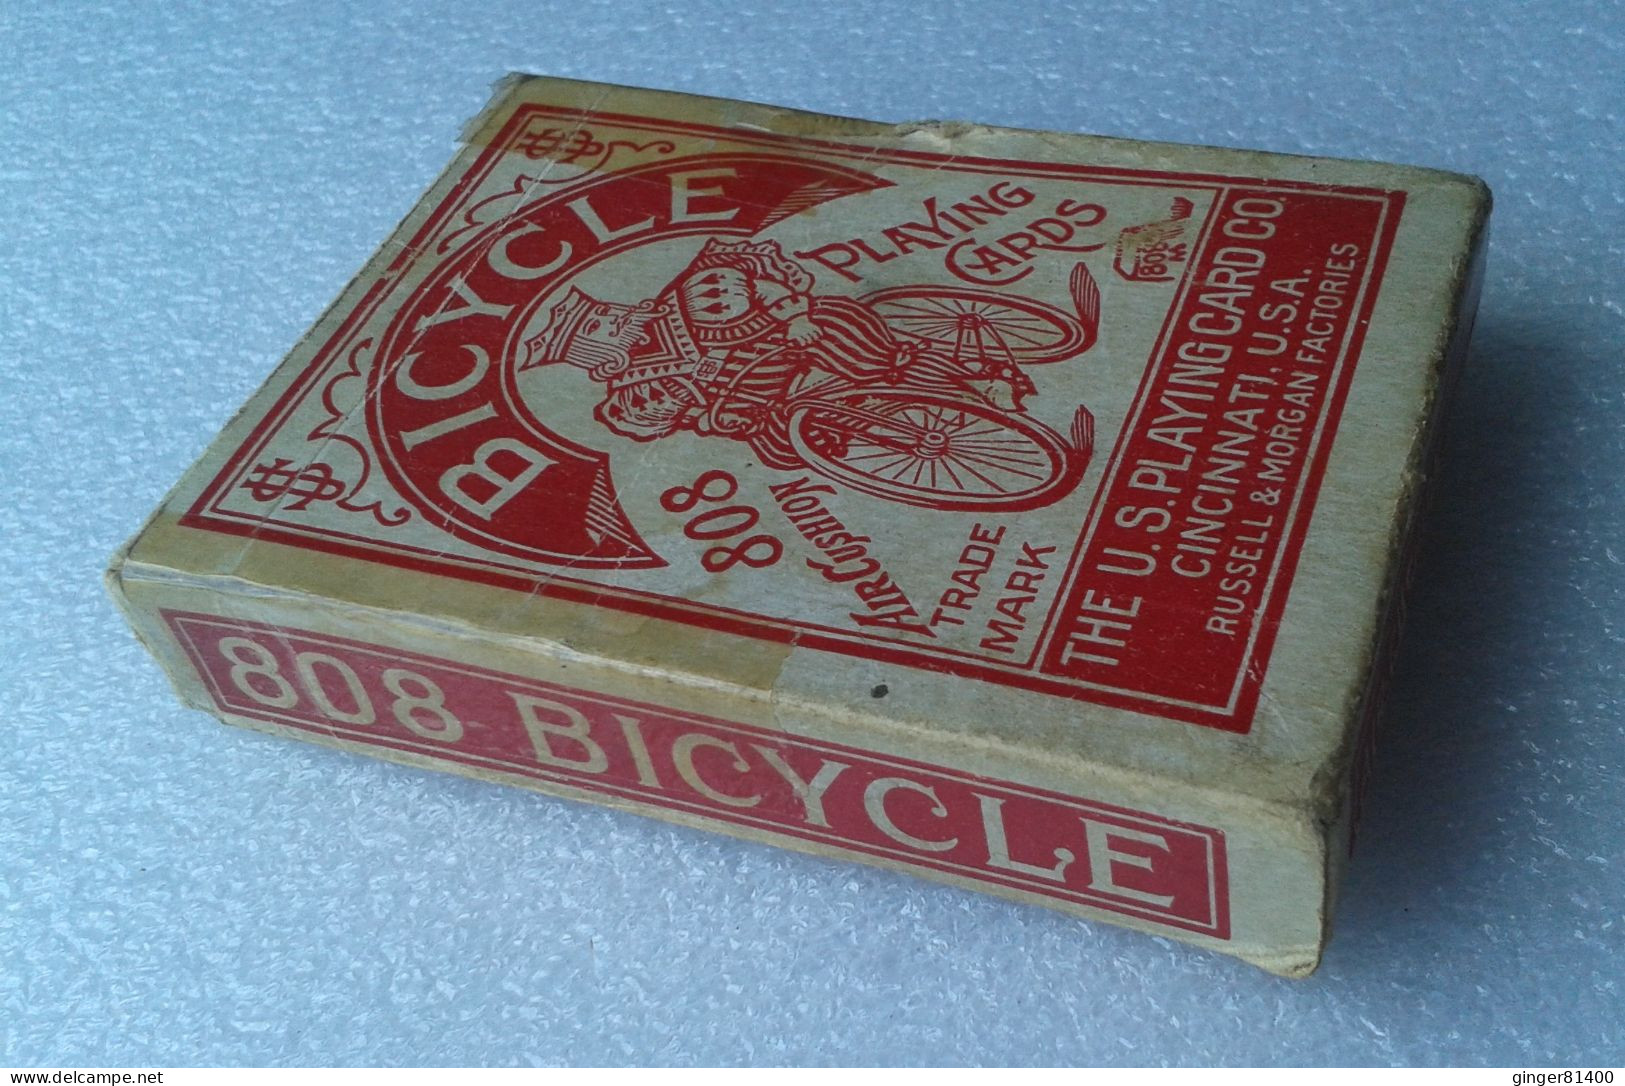 Ancien jeu de 52 cartes BICYCLE 808 Air CUSHION - The U.S PLAYIND CARD CO. Cincinnati U.S.A Russel & Morgan factories